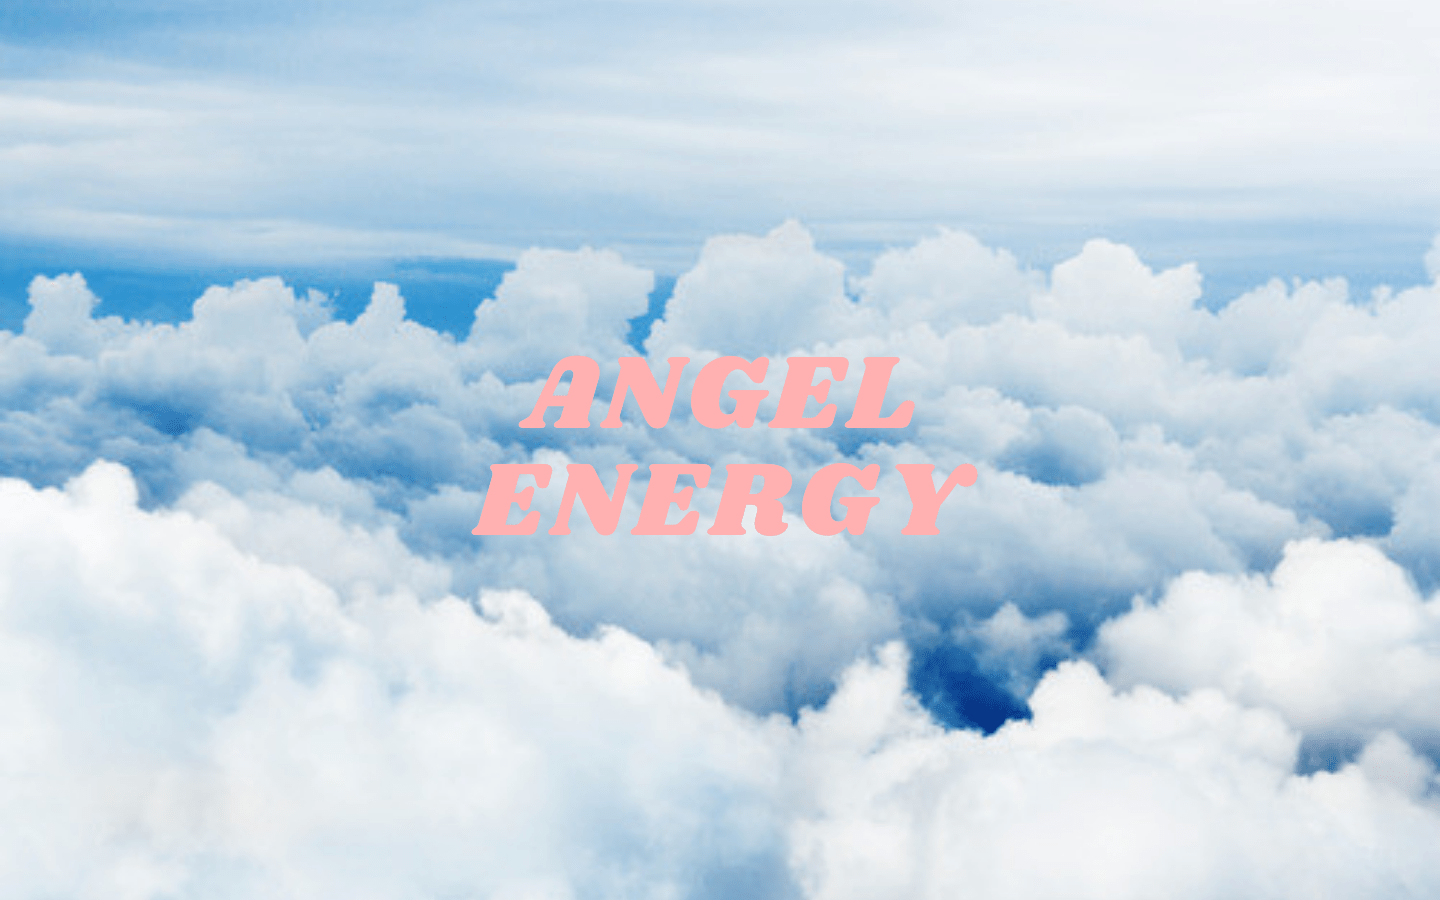 Angel Aesthetic Desktop Wallpapers - Top Free Angel Aesthetic Desktop ...